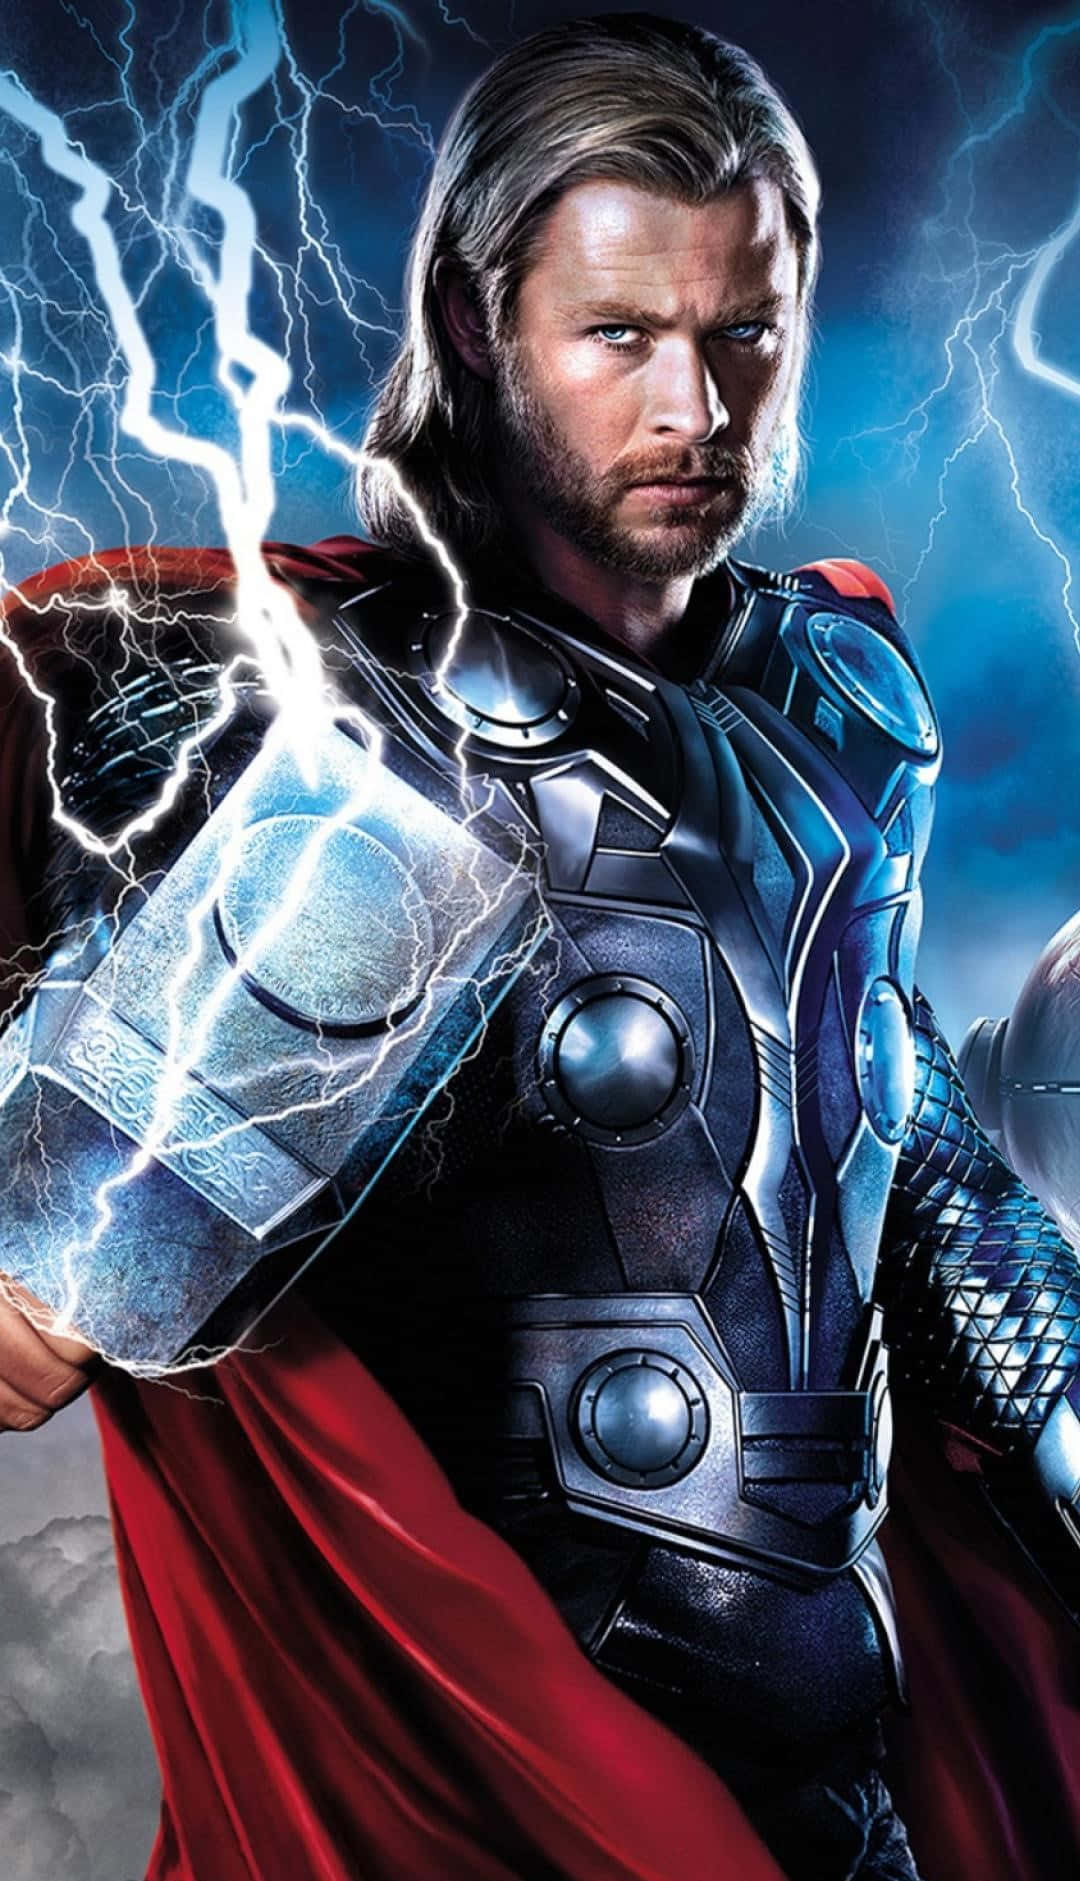 Thor, wielding his mighty hammer, Mjolnir